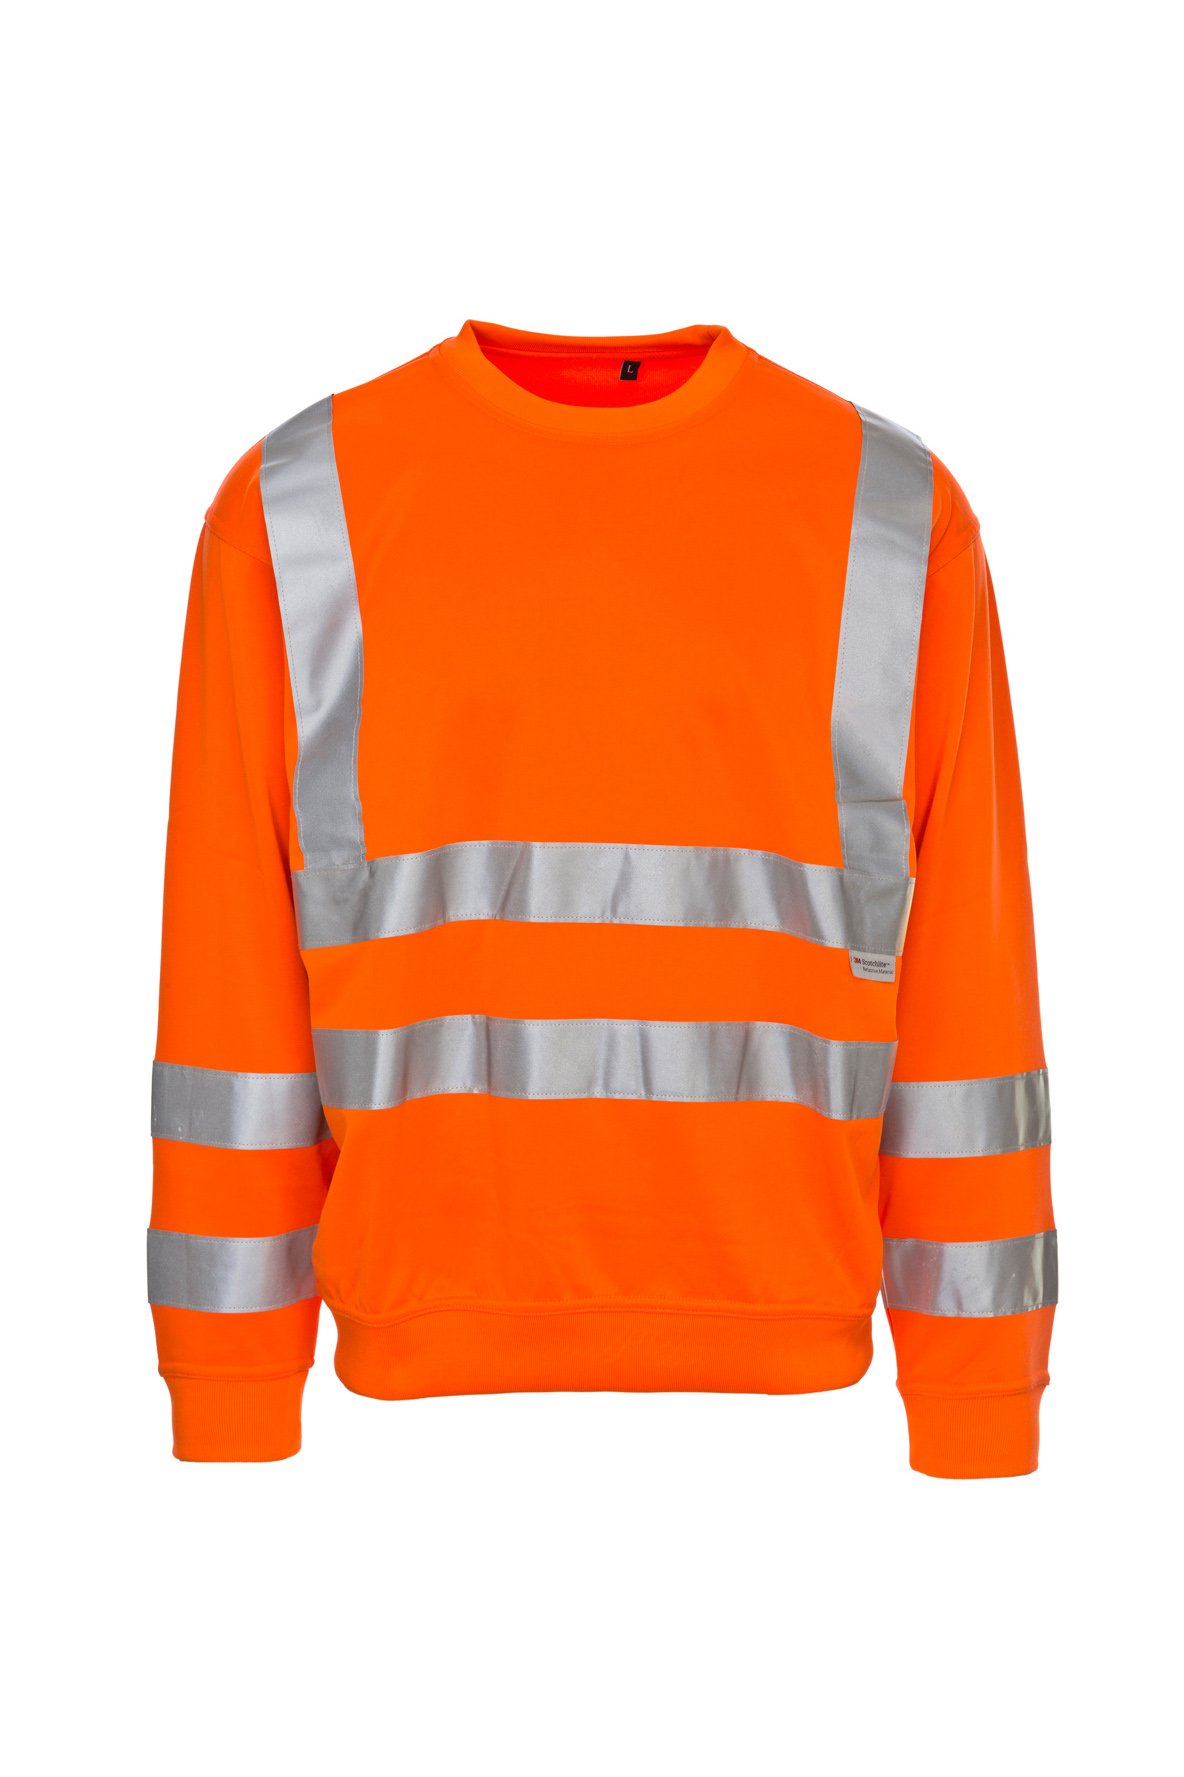 Warnschutz-Sweatshirt, fluorescent lemon, ISO 20471 Kl. 3